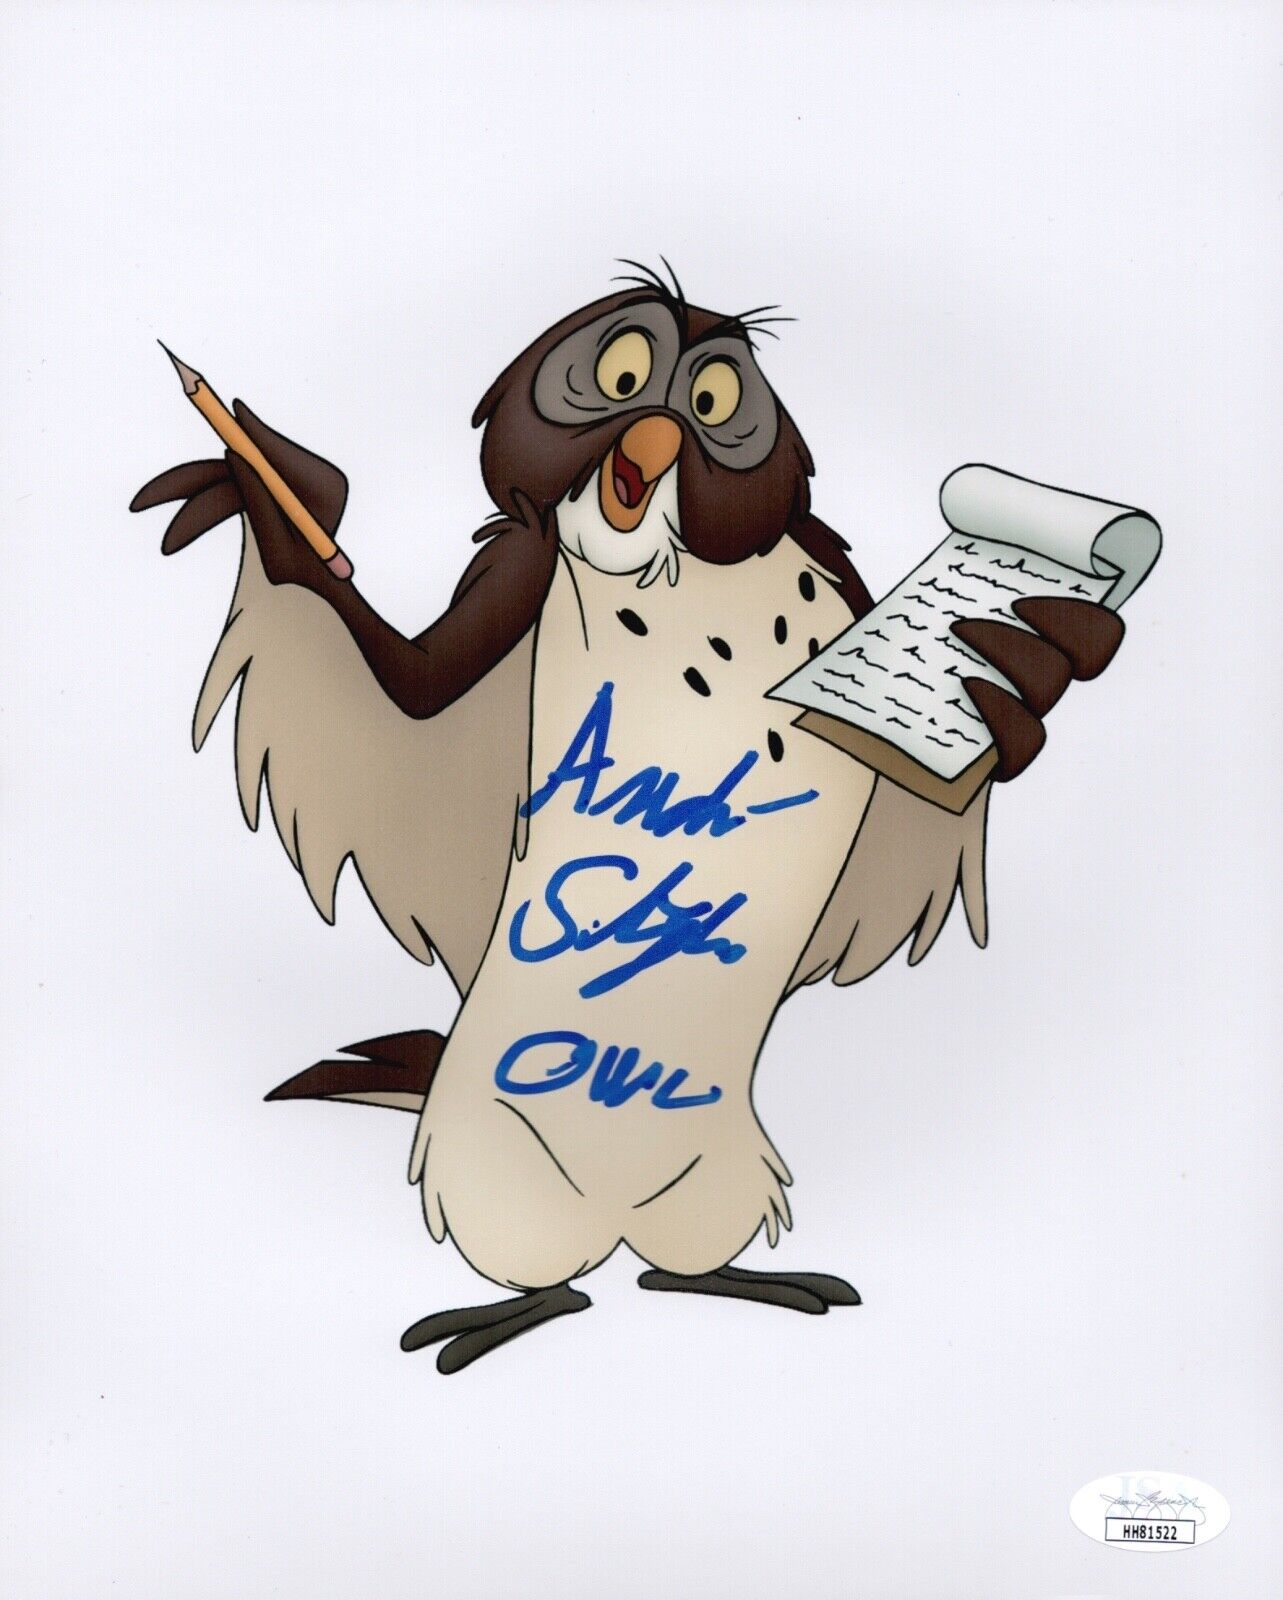 ANDRE STOJKA Signed 8x10 Photo Poster painting OWL Winnie the Pooh Disney Autograph JSA COA Cert